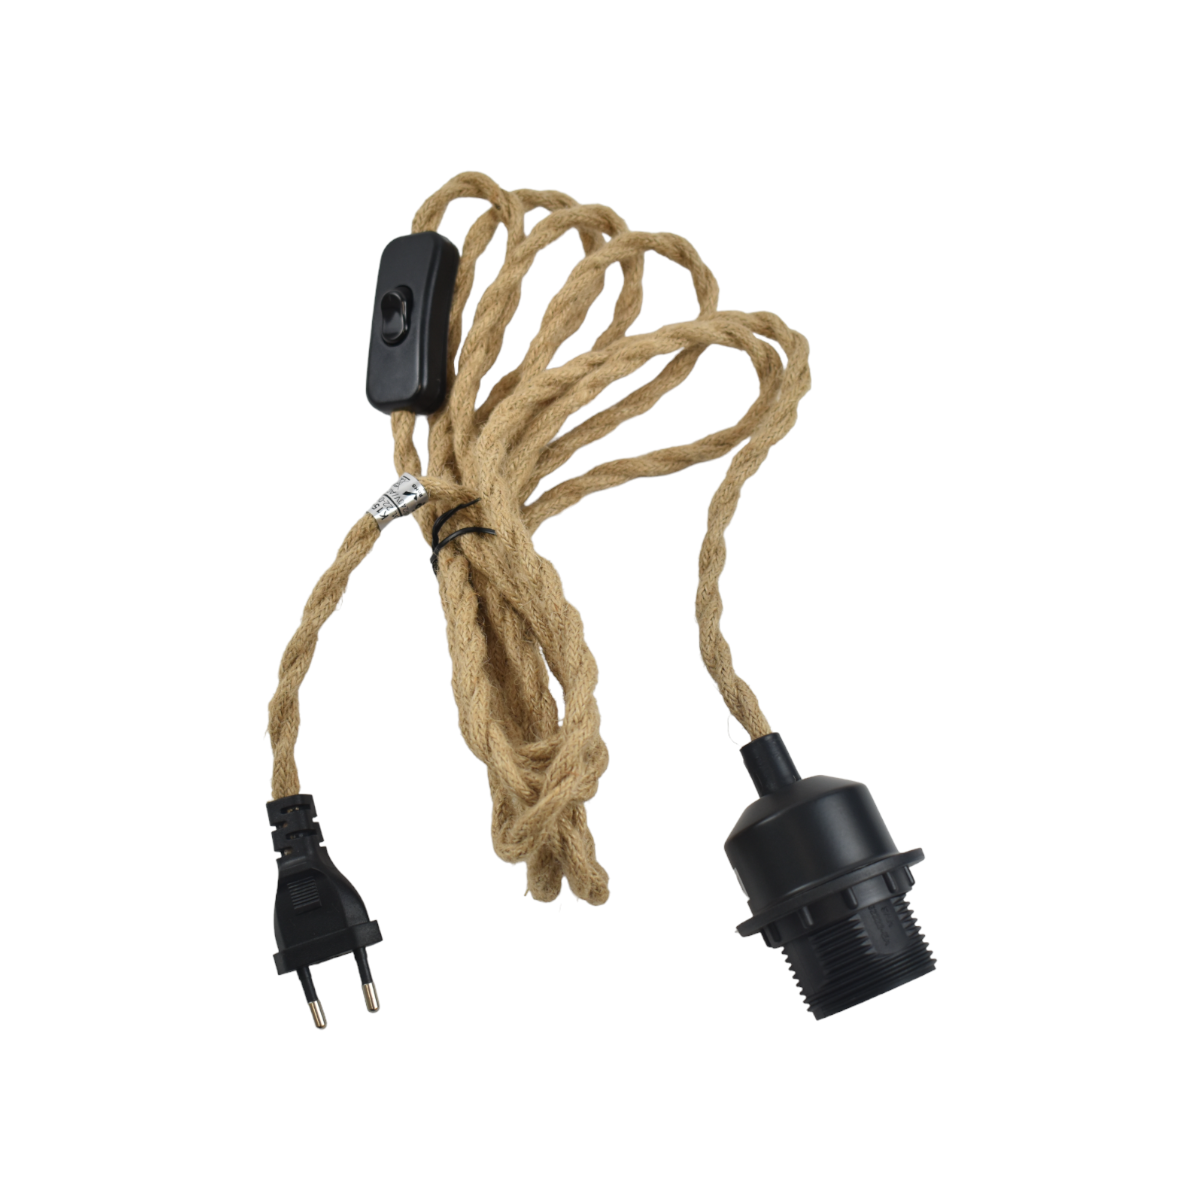 Casquillo E27 con cable de PVC, interruptor y enchufe - Negro